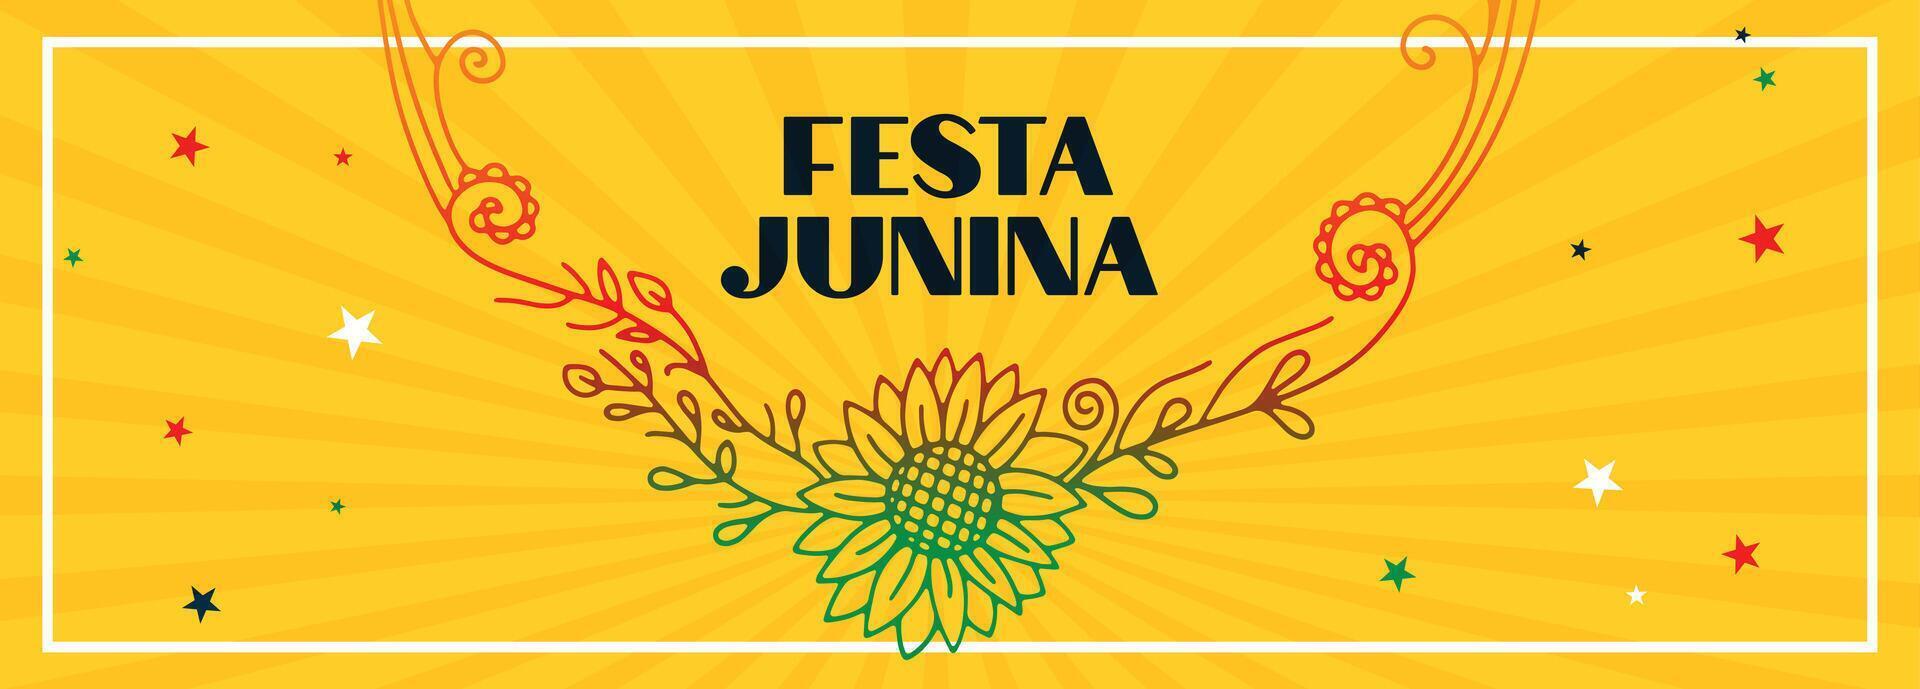 festa junina tradicional Brasil festival flor bandera diseño vector